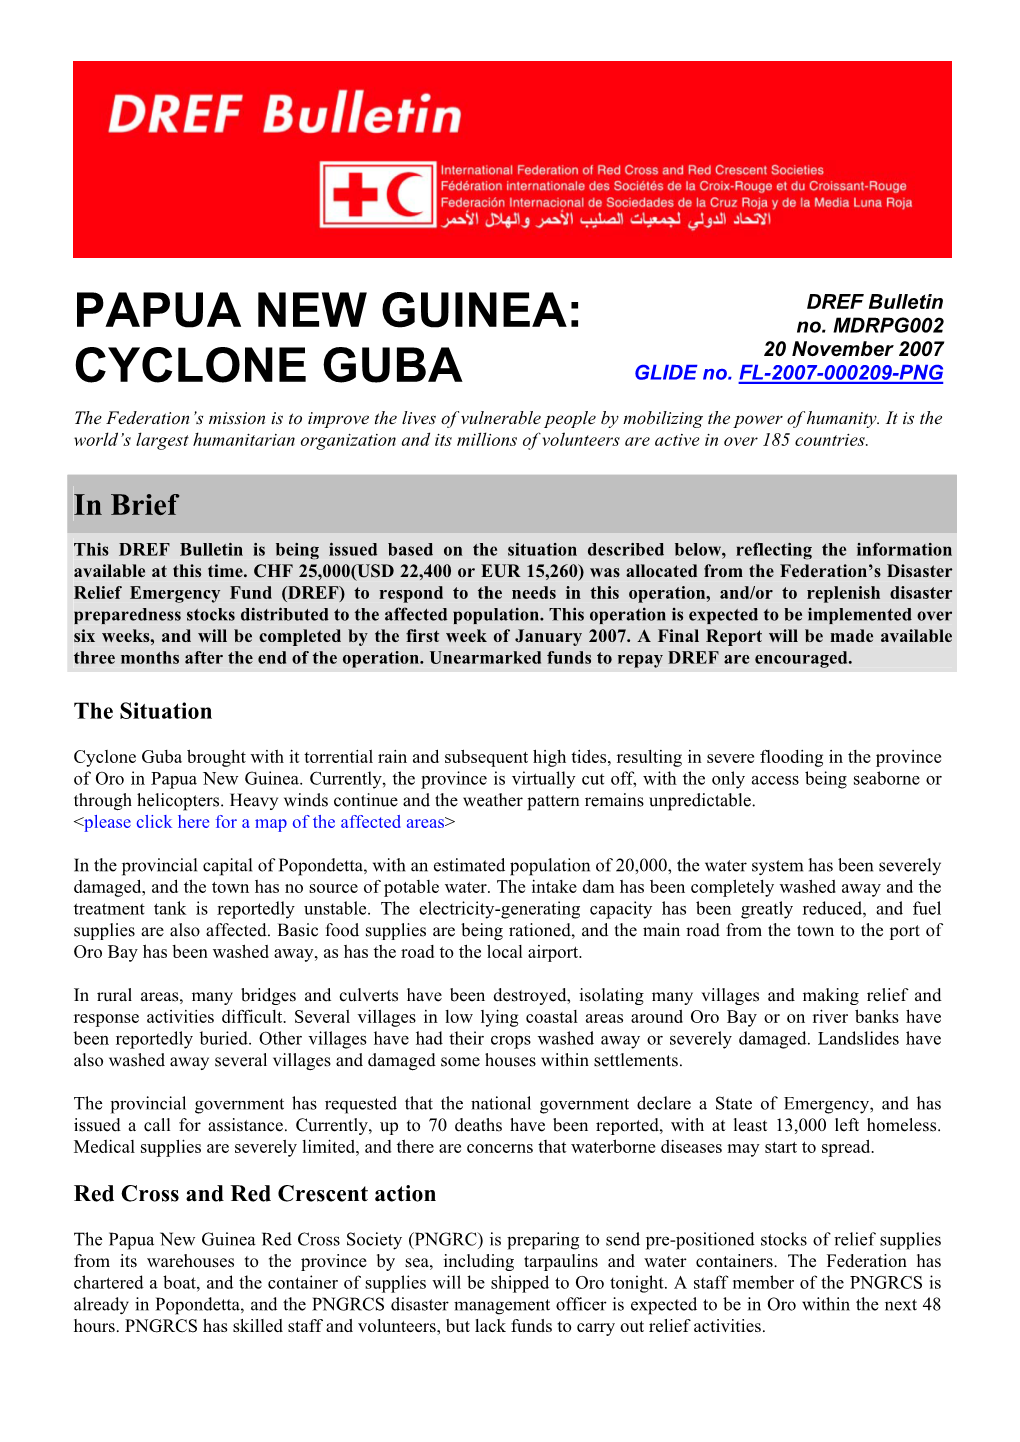 DREF Bulletin PAPUA NEW GUINEA: No